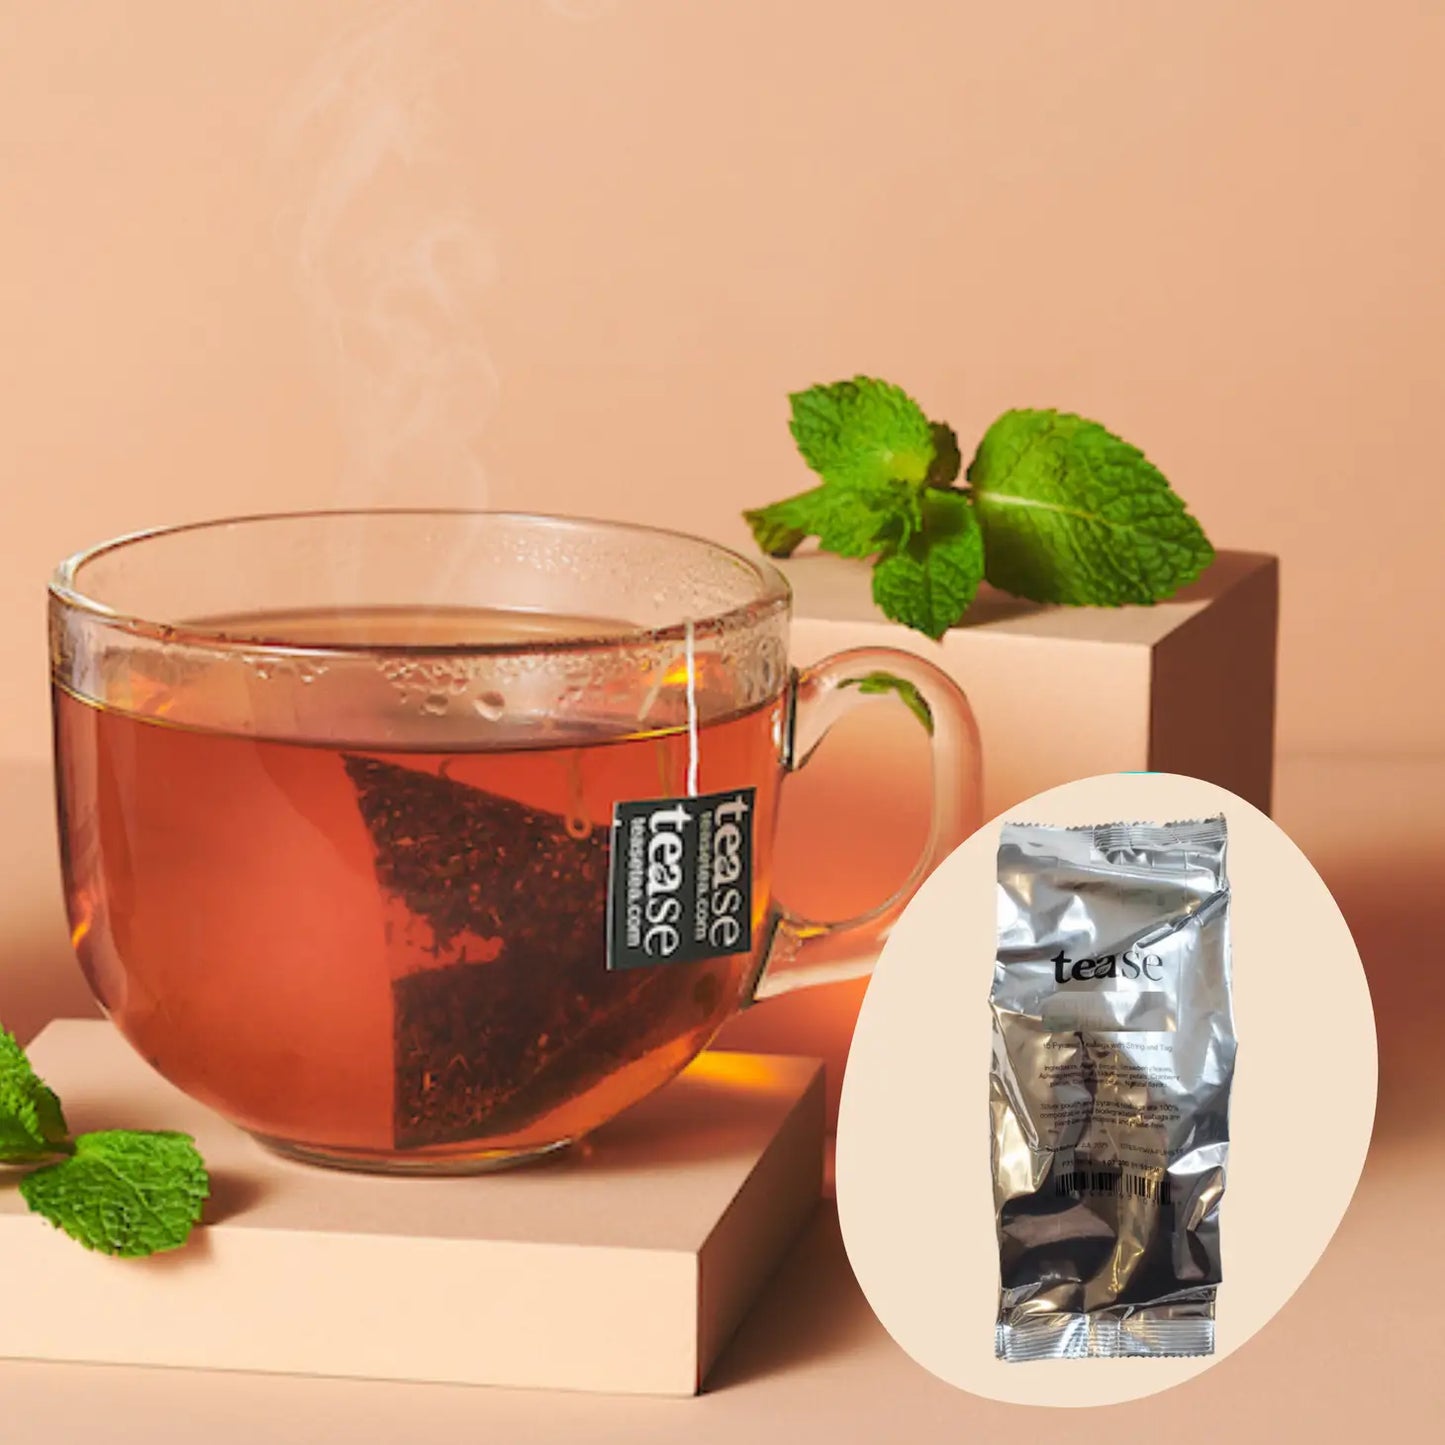 Golden Slumbers - Teabags - Tease Tea